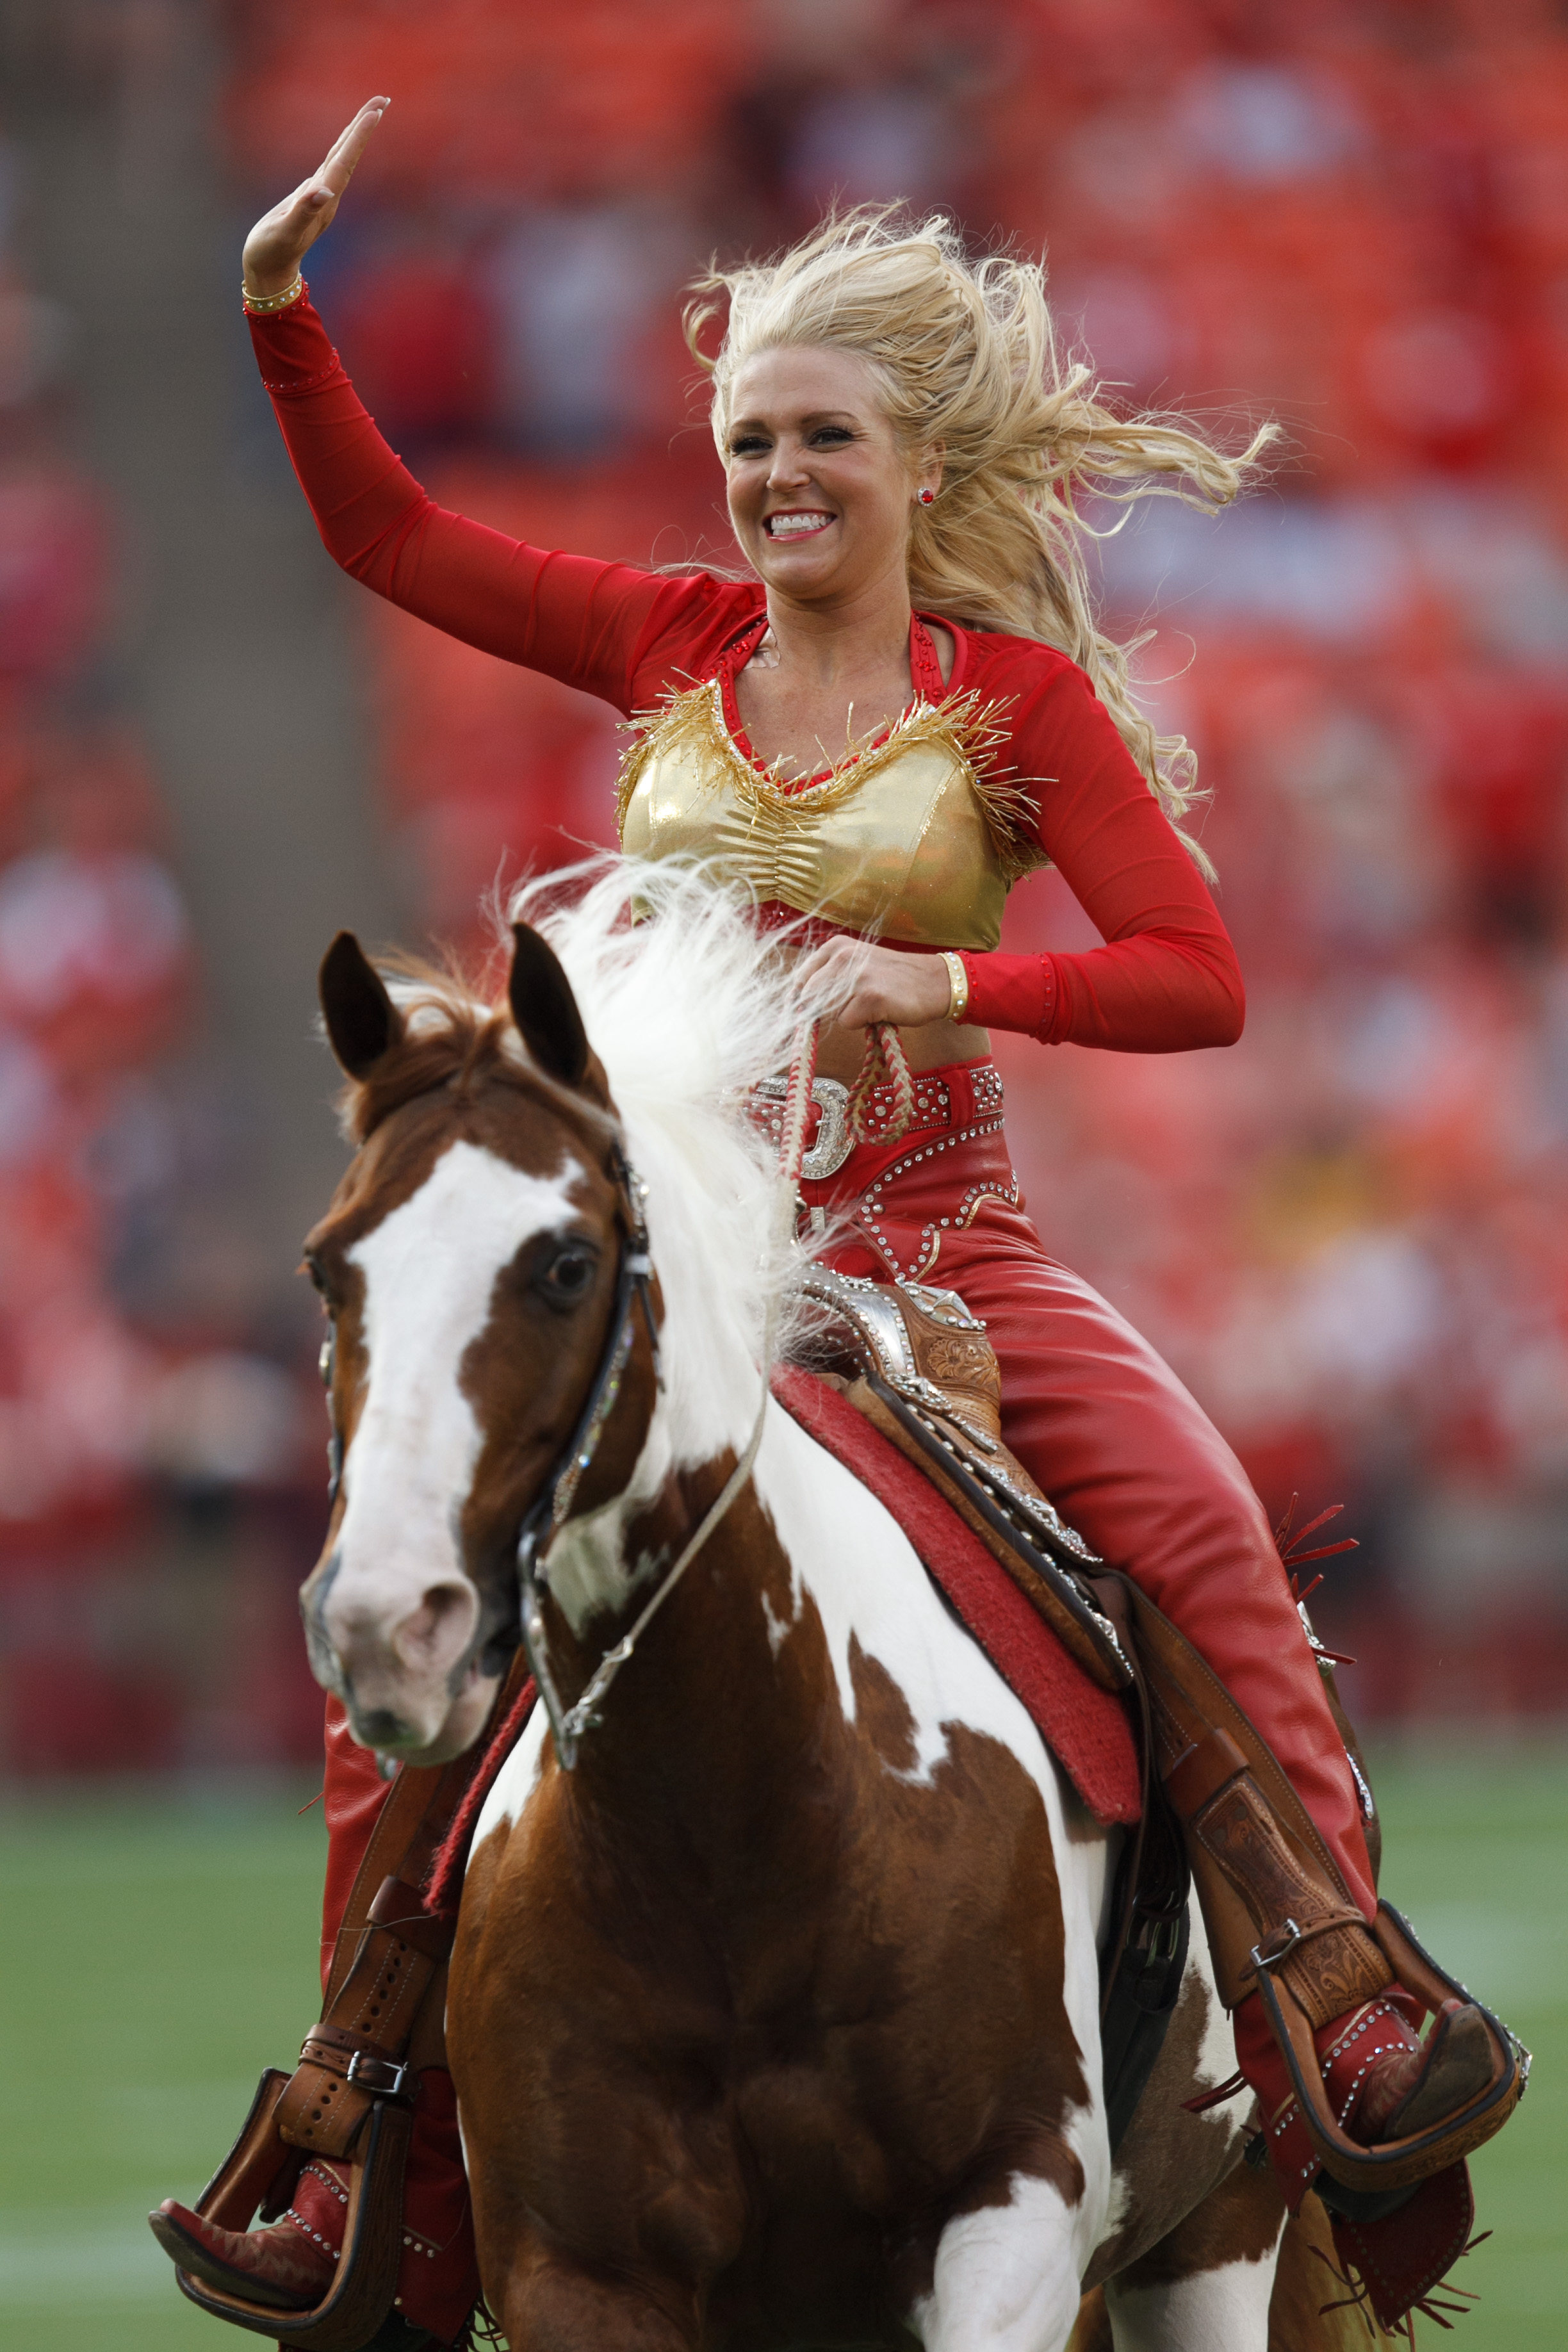 A Chiefs cheerleader on a horse